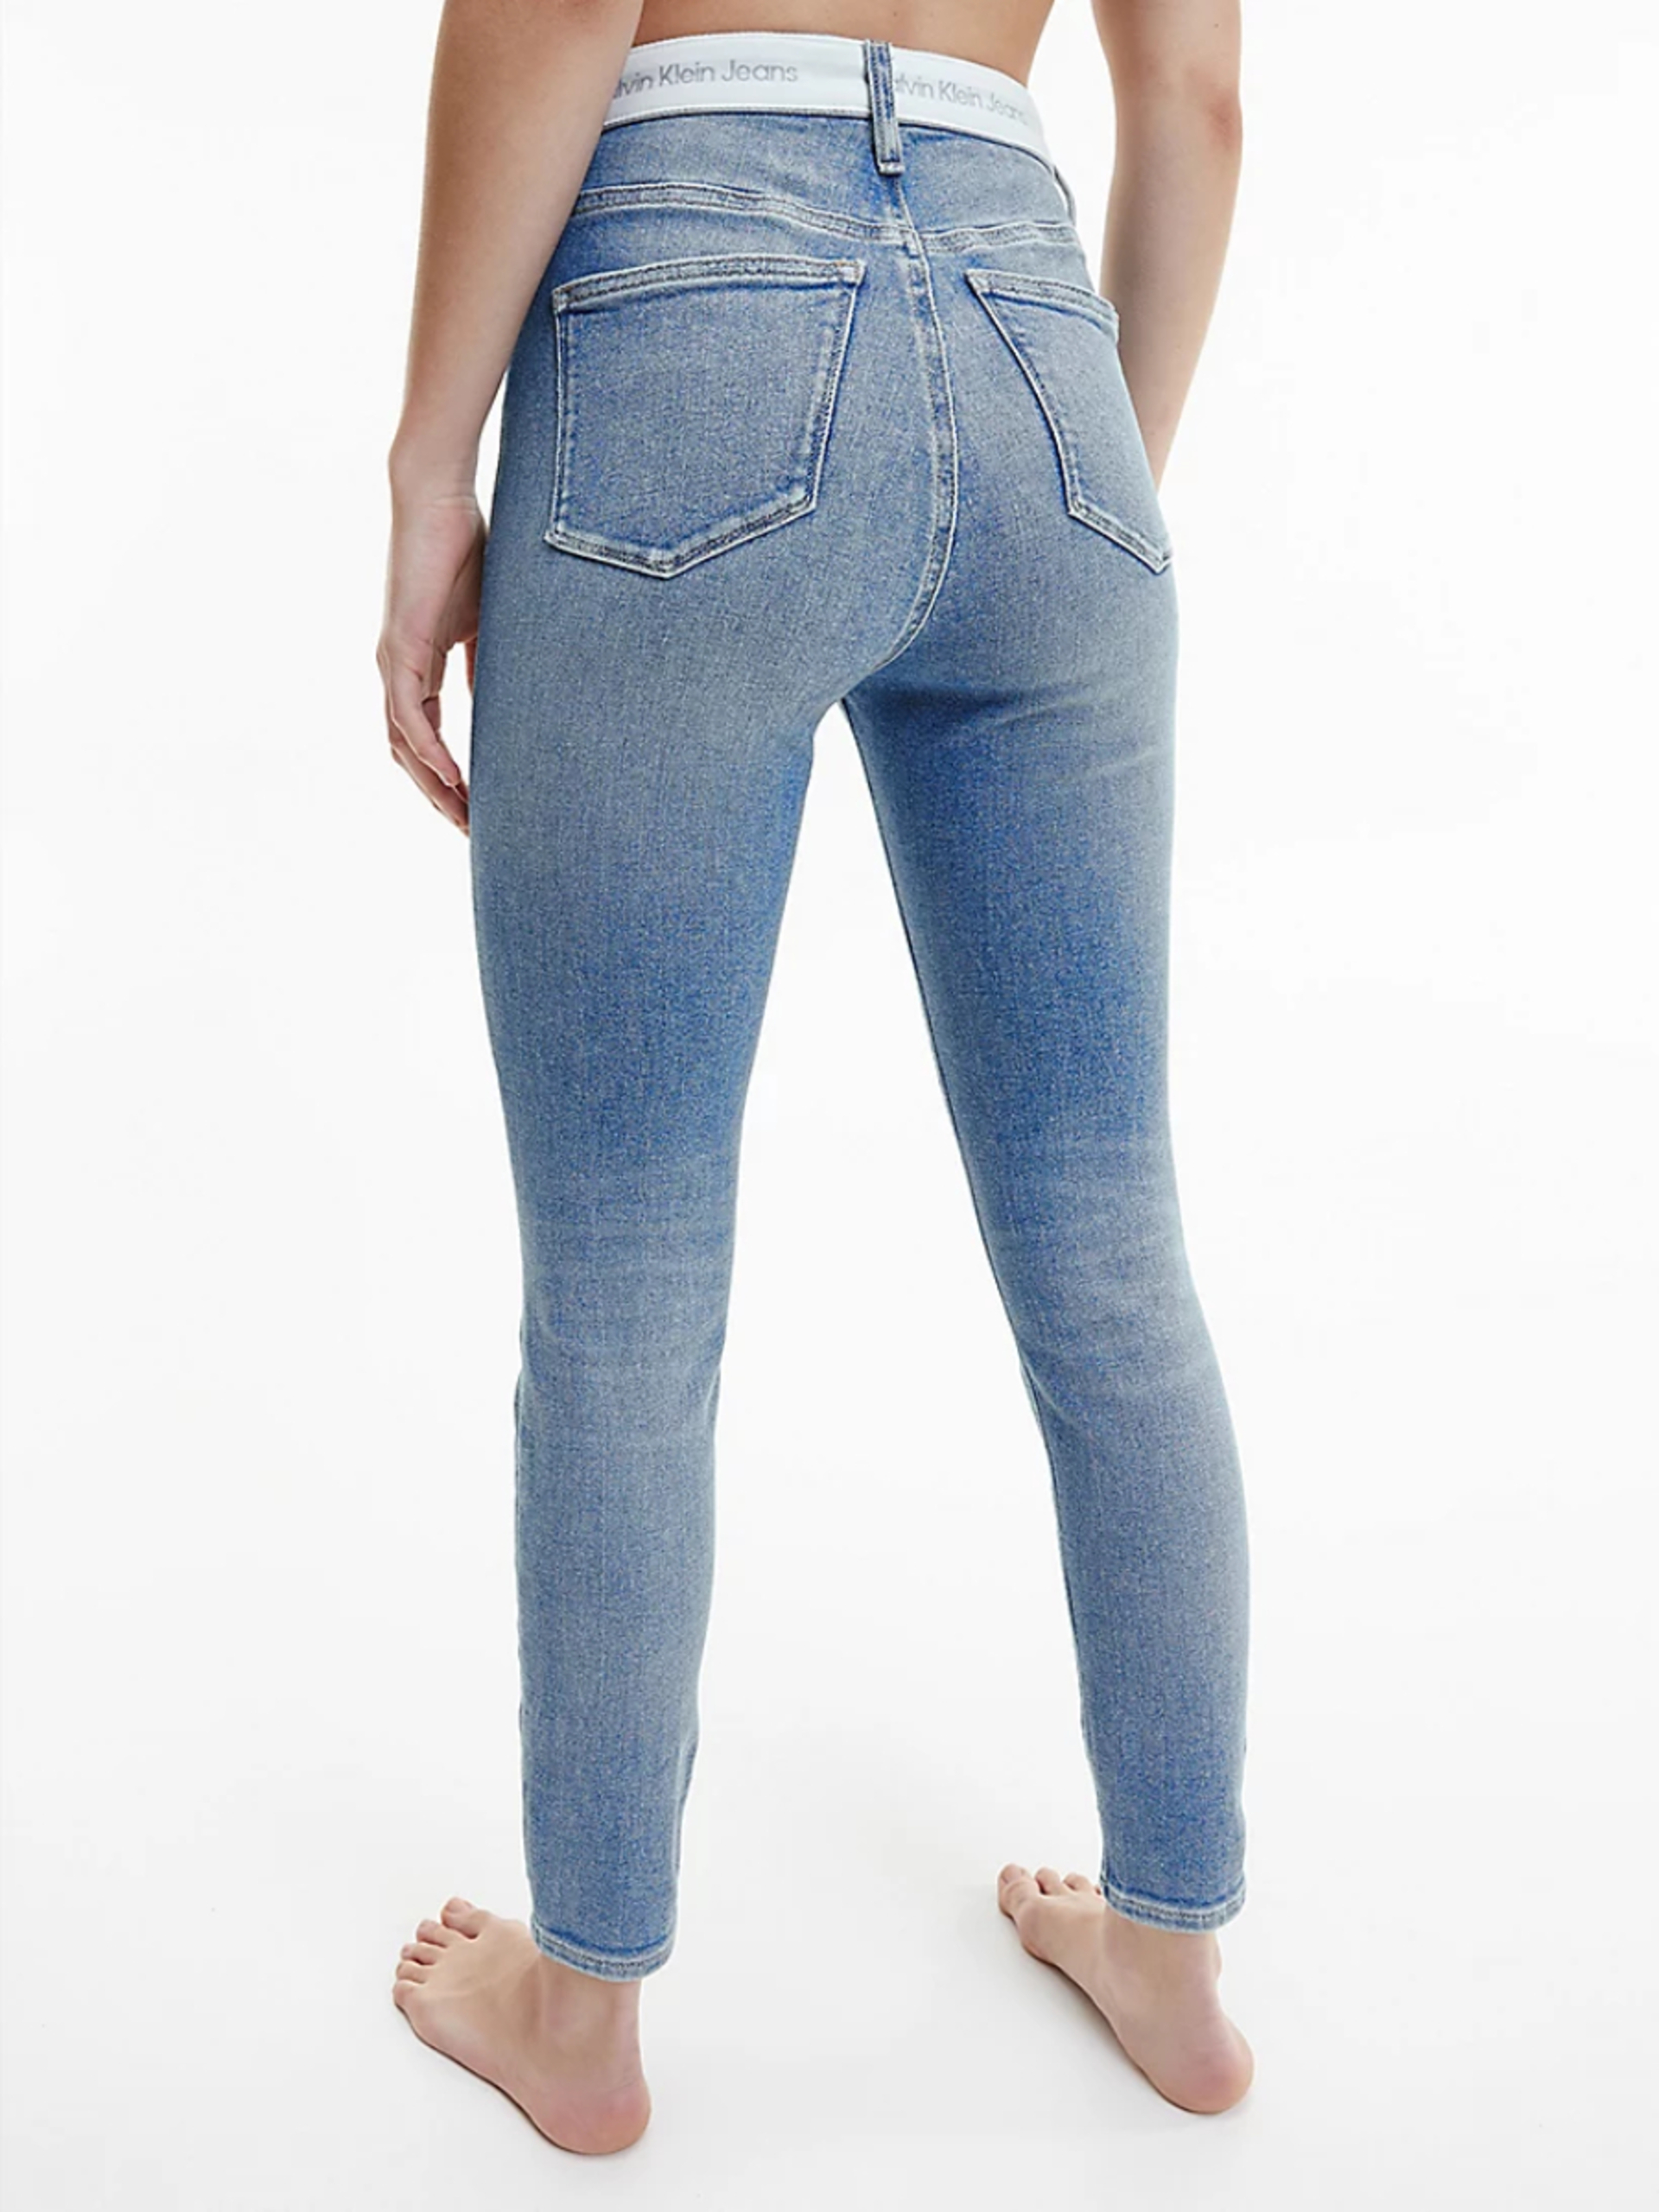 Calvin Klein dámské světle modré džíny - 29/NI (1AA)